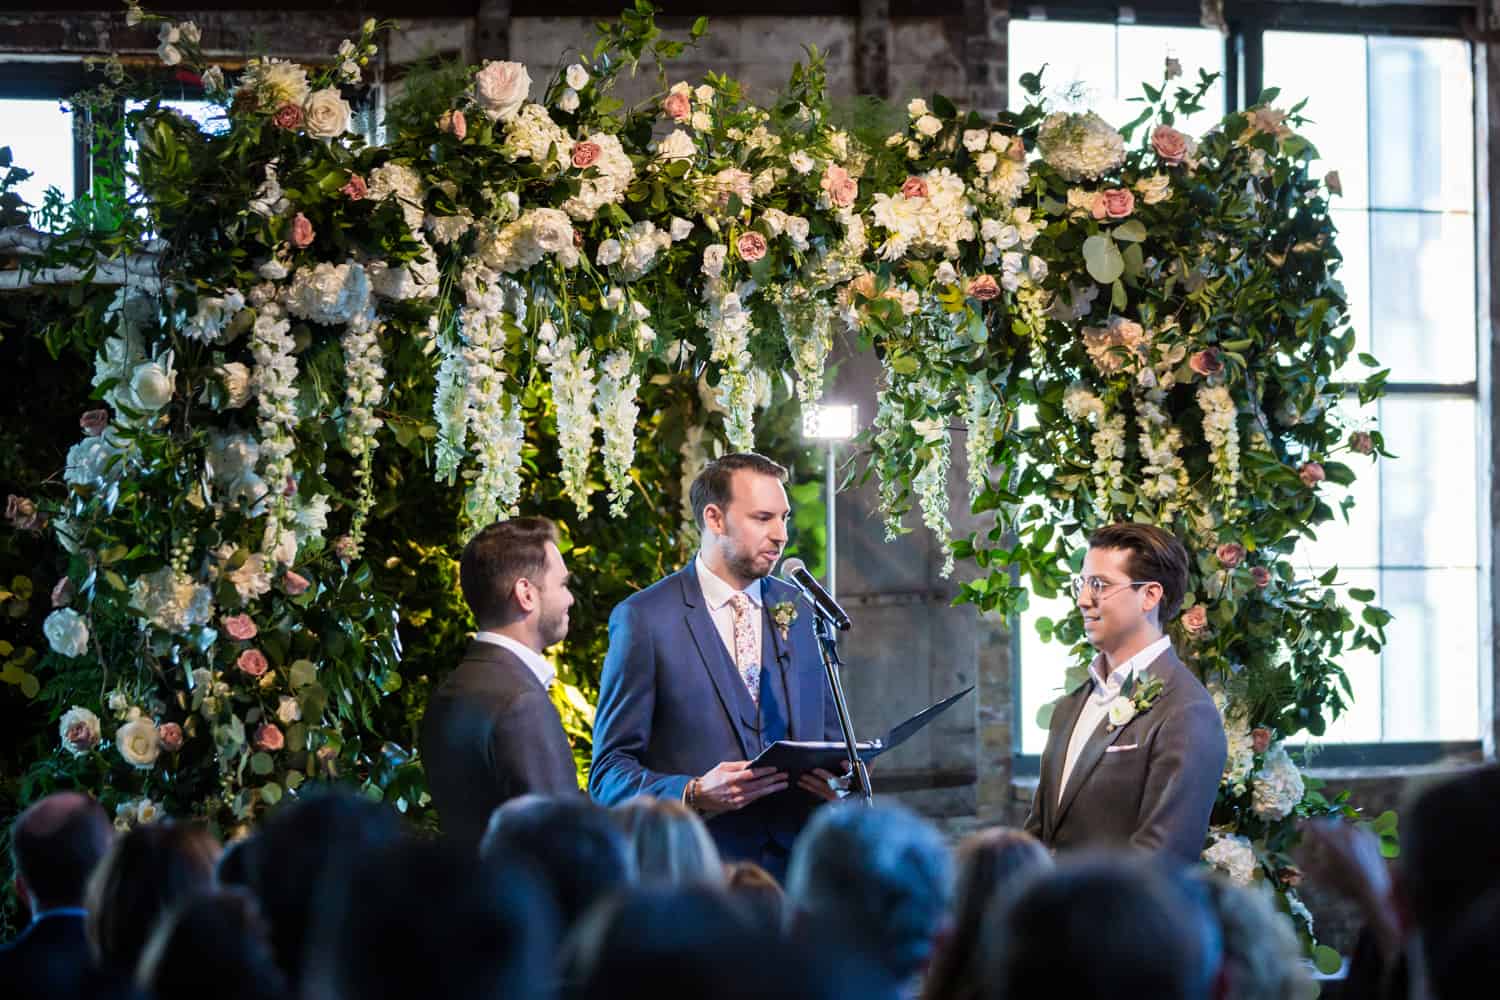 Greenpoint Loft wedding photos of gay wedding ceremony under floral altarpiece